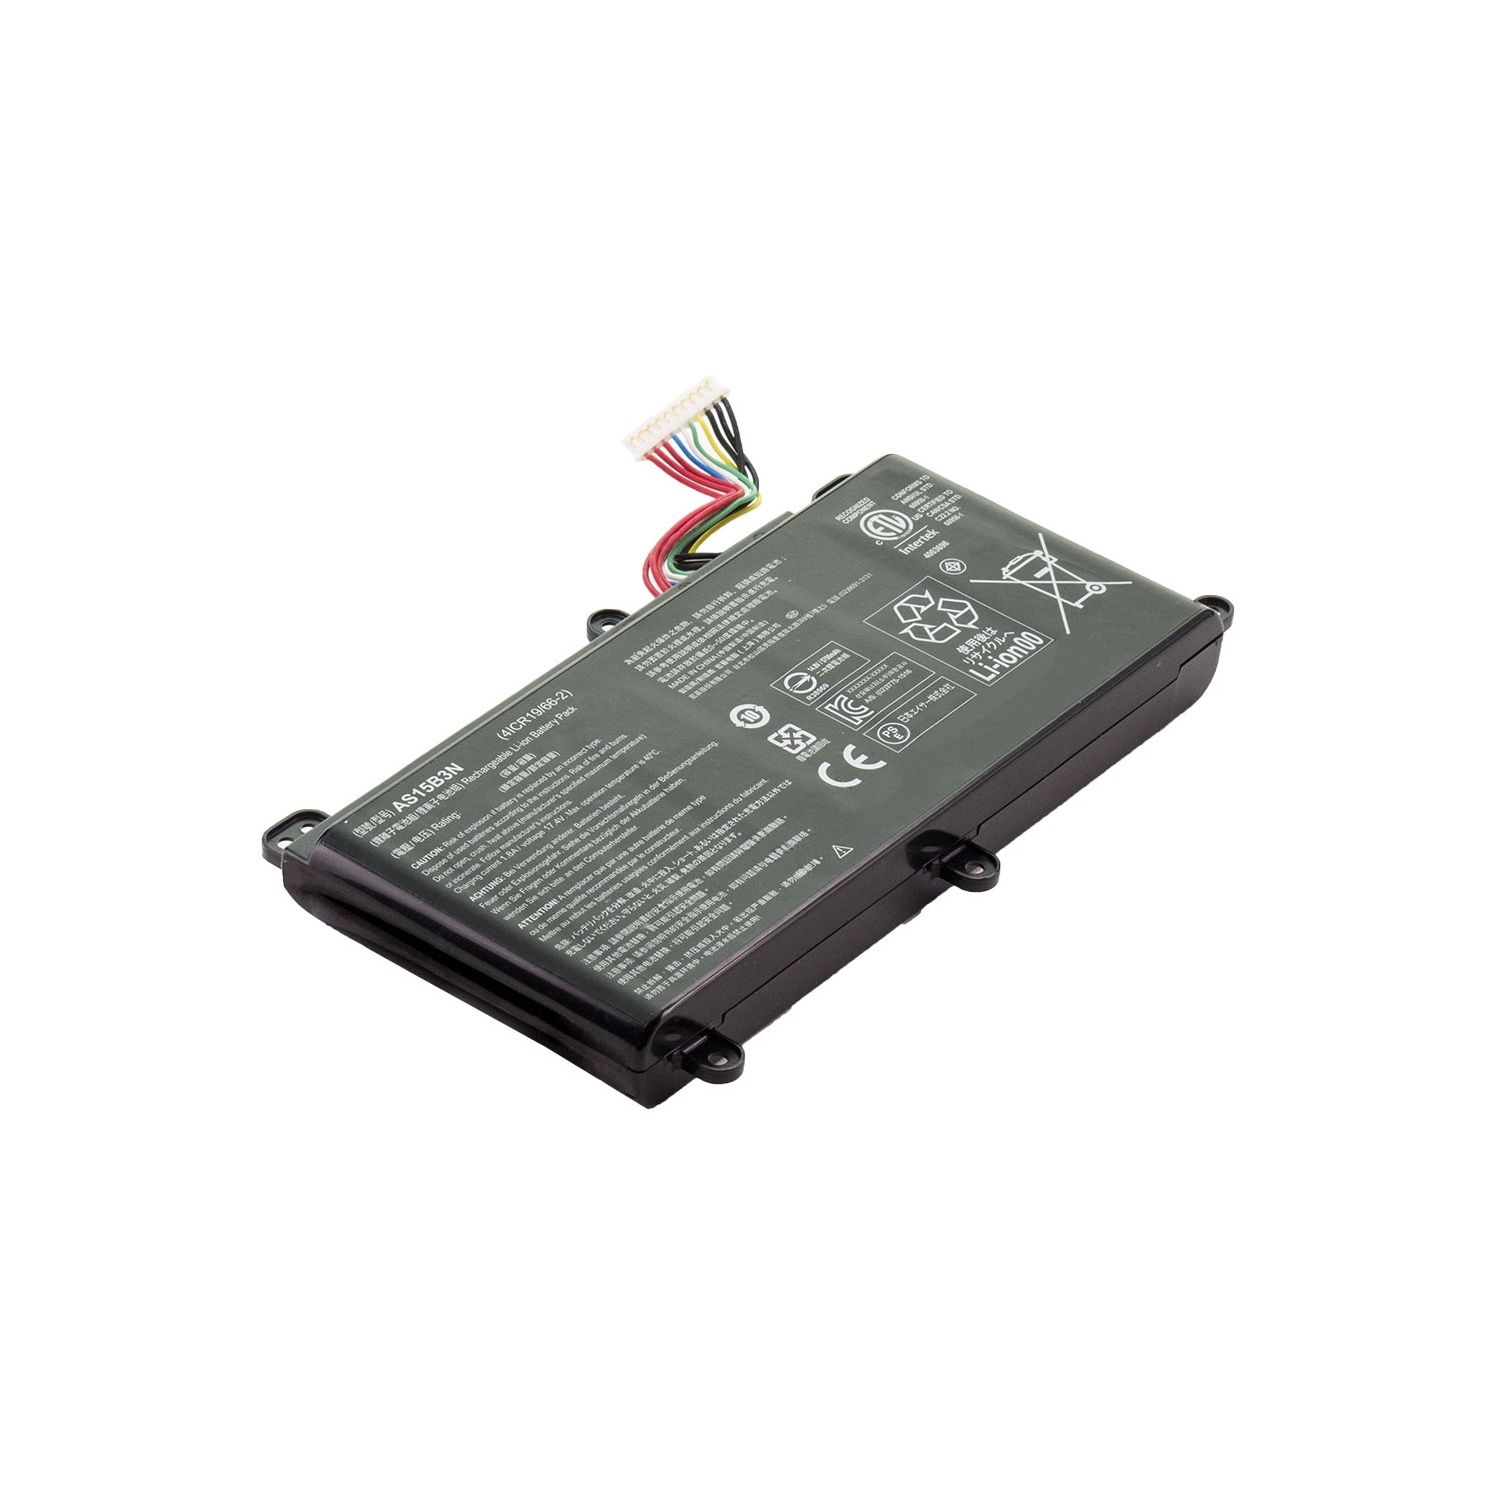 BATTDEPOT NEW Laptop Battery for Acer Predator 15 G9-592 AS15B3N KT.00803.004 KT.00803.005